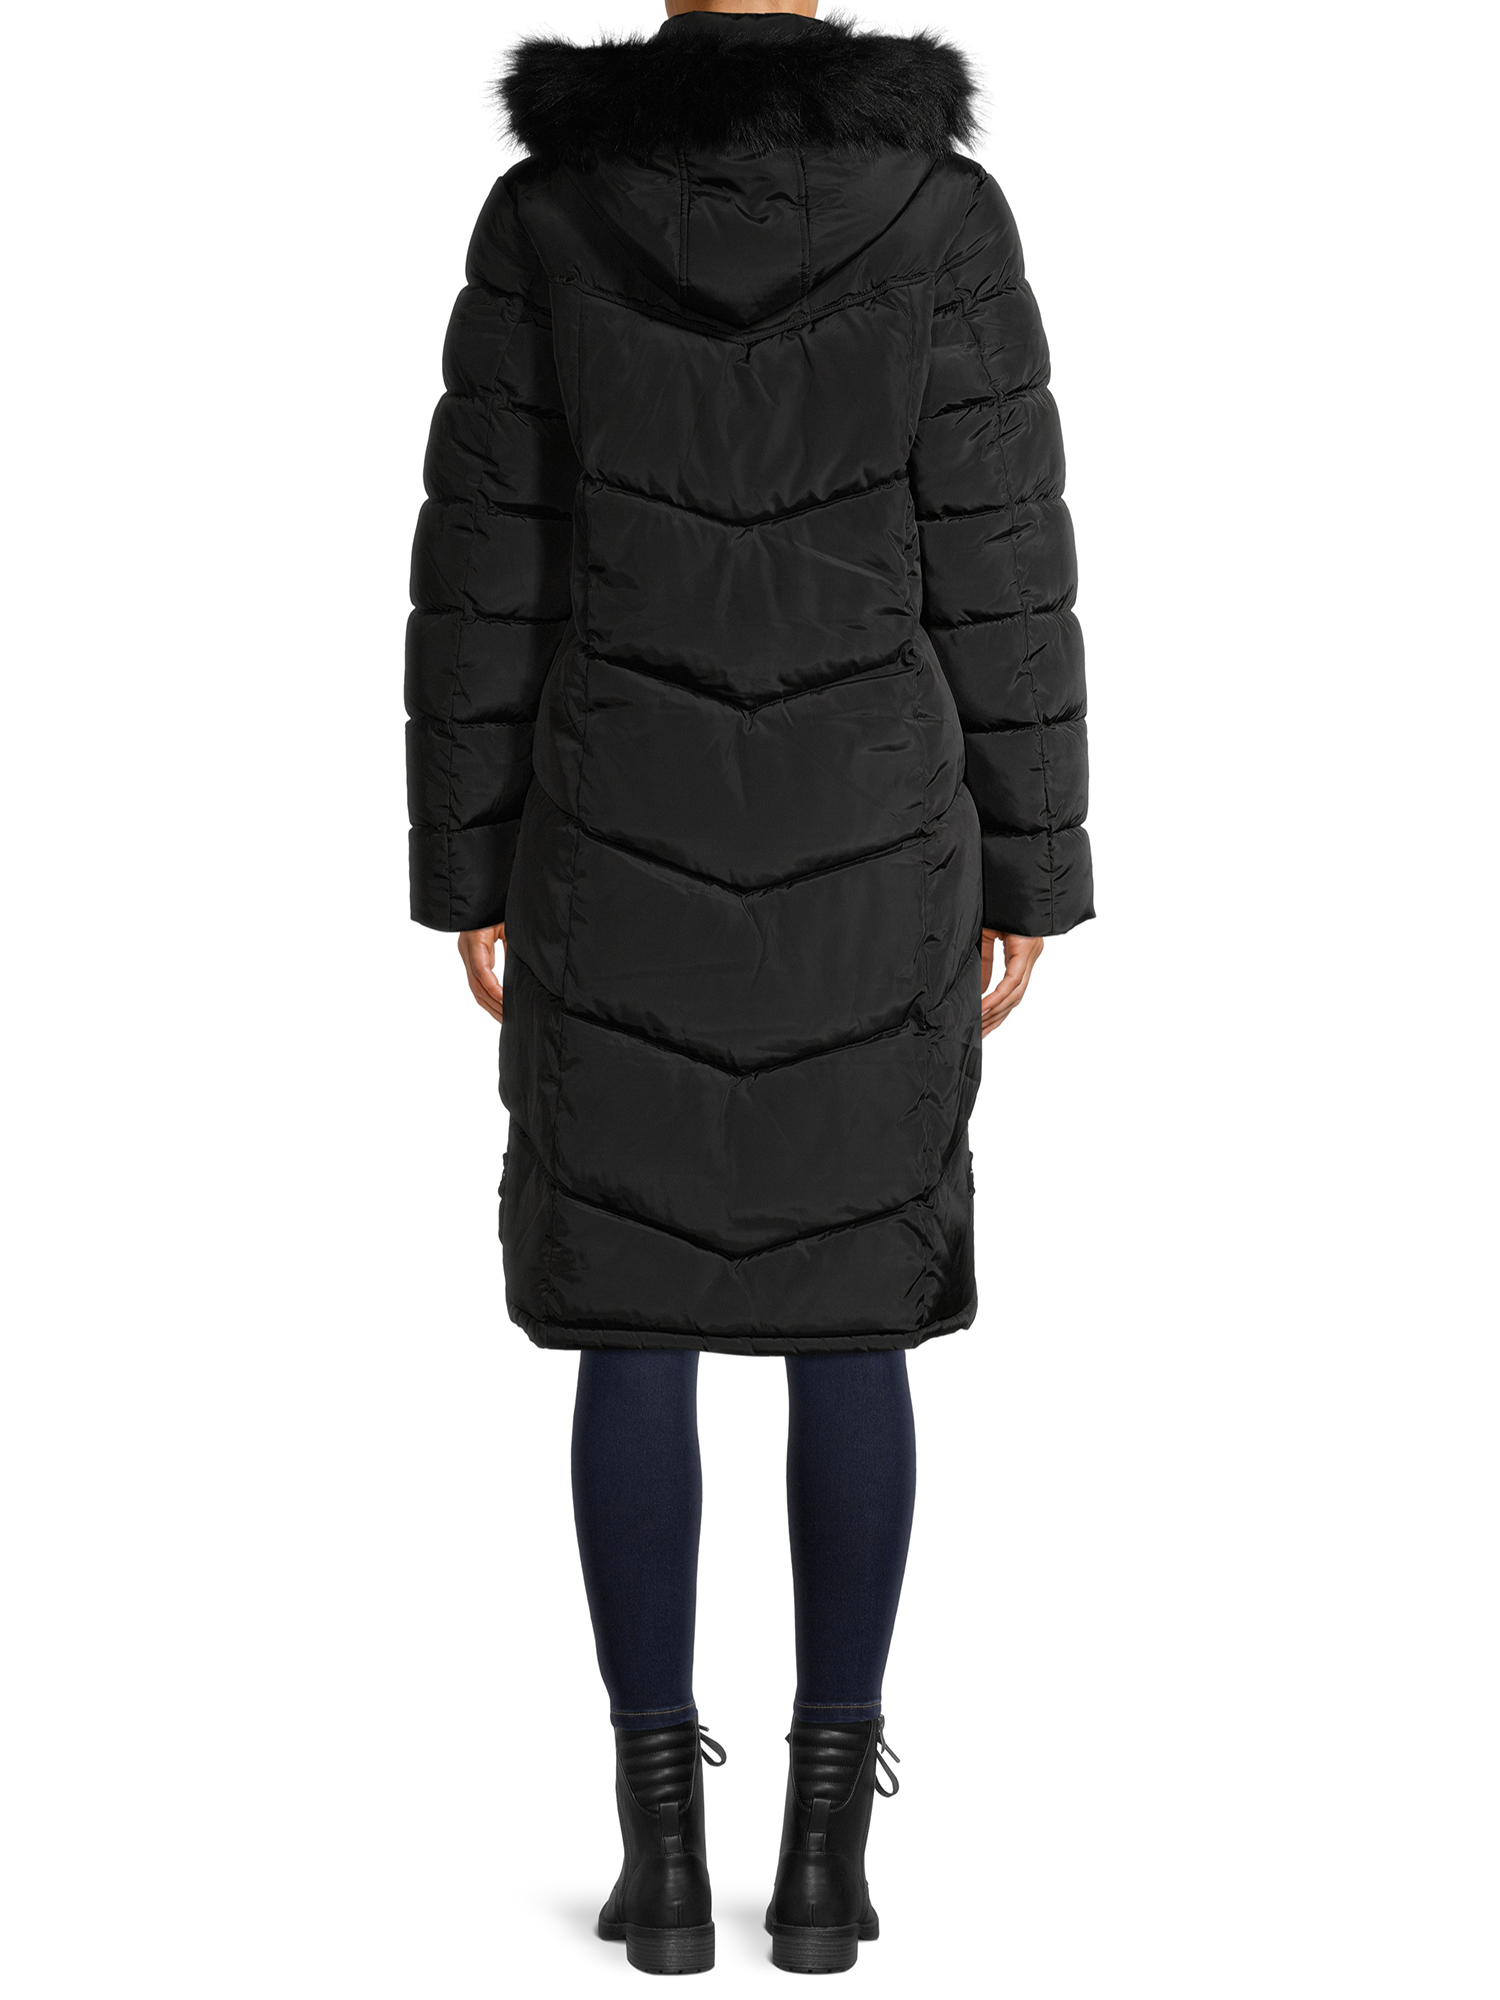 Big Chill Women's Maxi Chevron Puffer Coat with Faux Fur Trim Hood - image 5 of 6